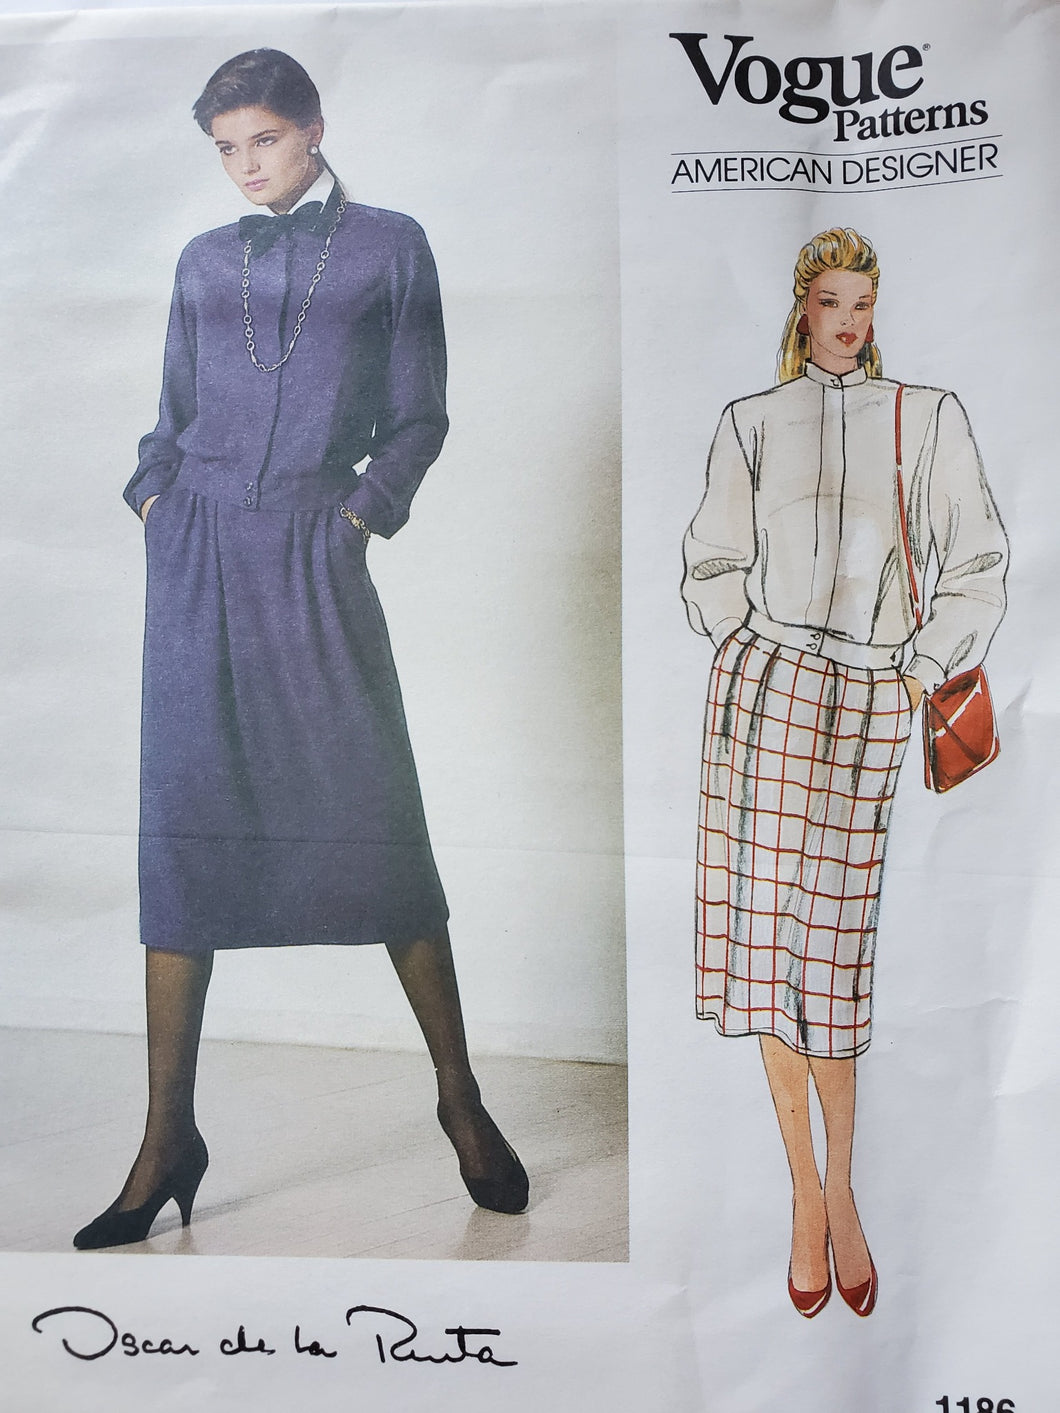 Vogue Pattern 1186, UNCUT, Designer Original Oscar de la Renta, Skirt and Top, Size 10, Vintage